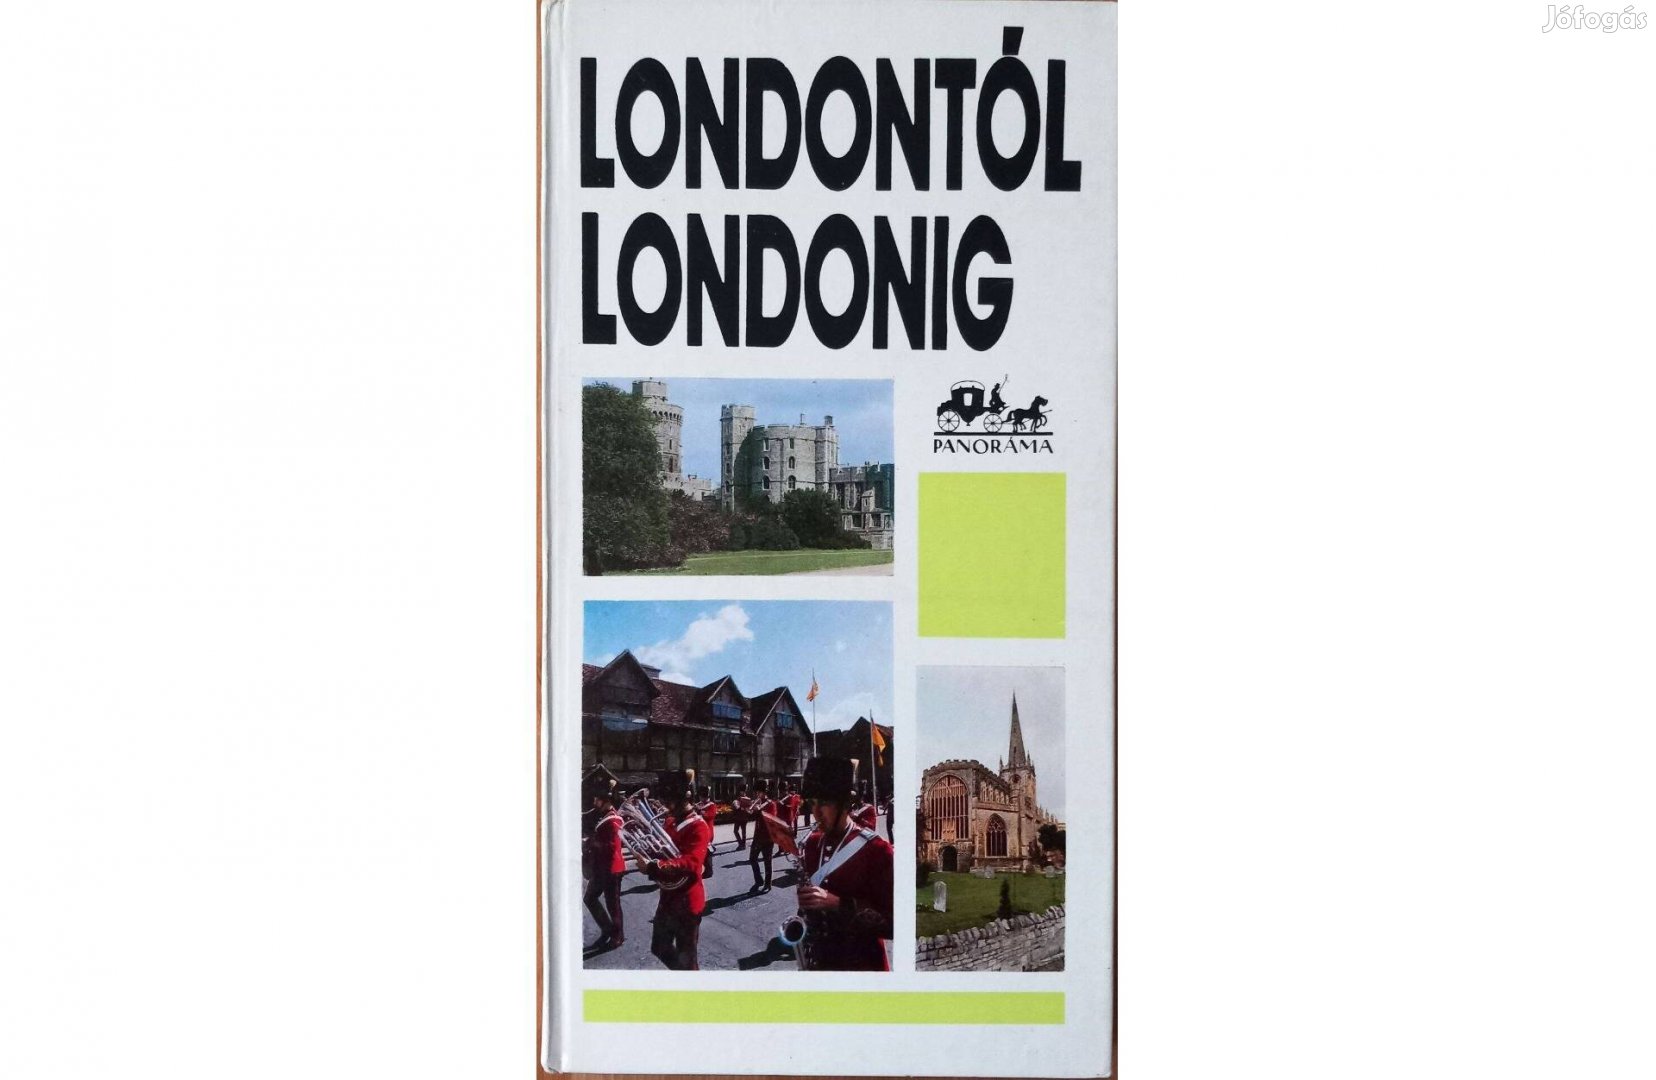 Londontól Londonig - Panoráma útikönyvek